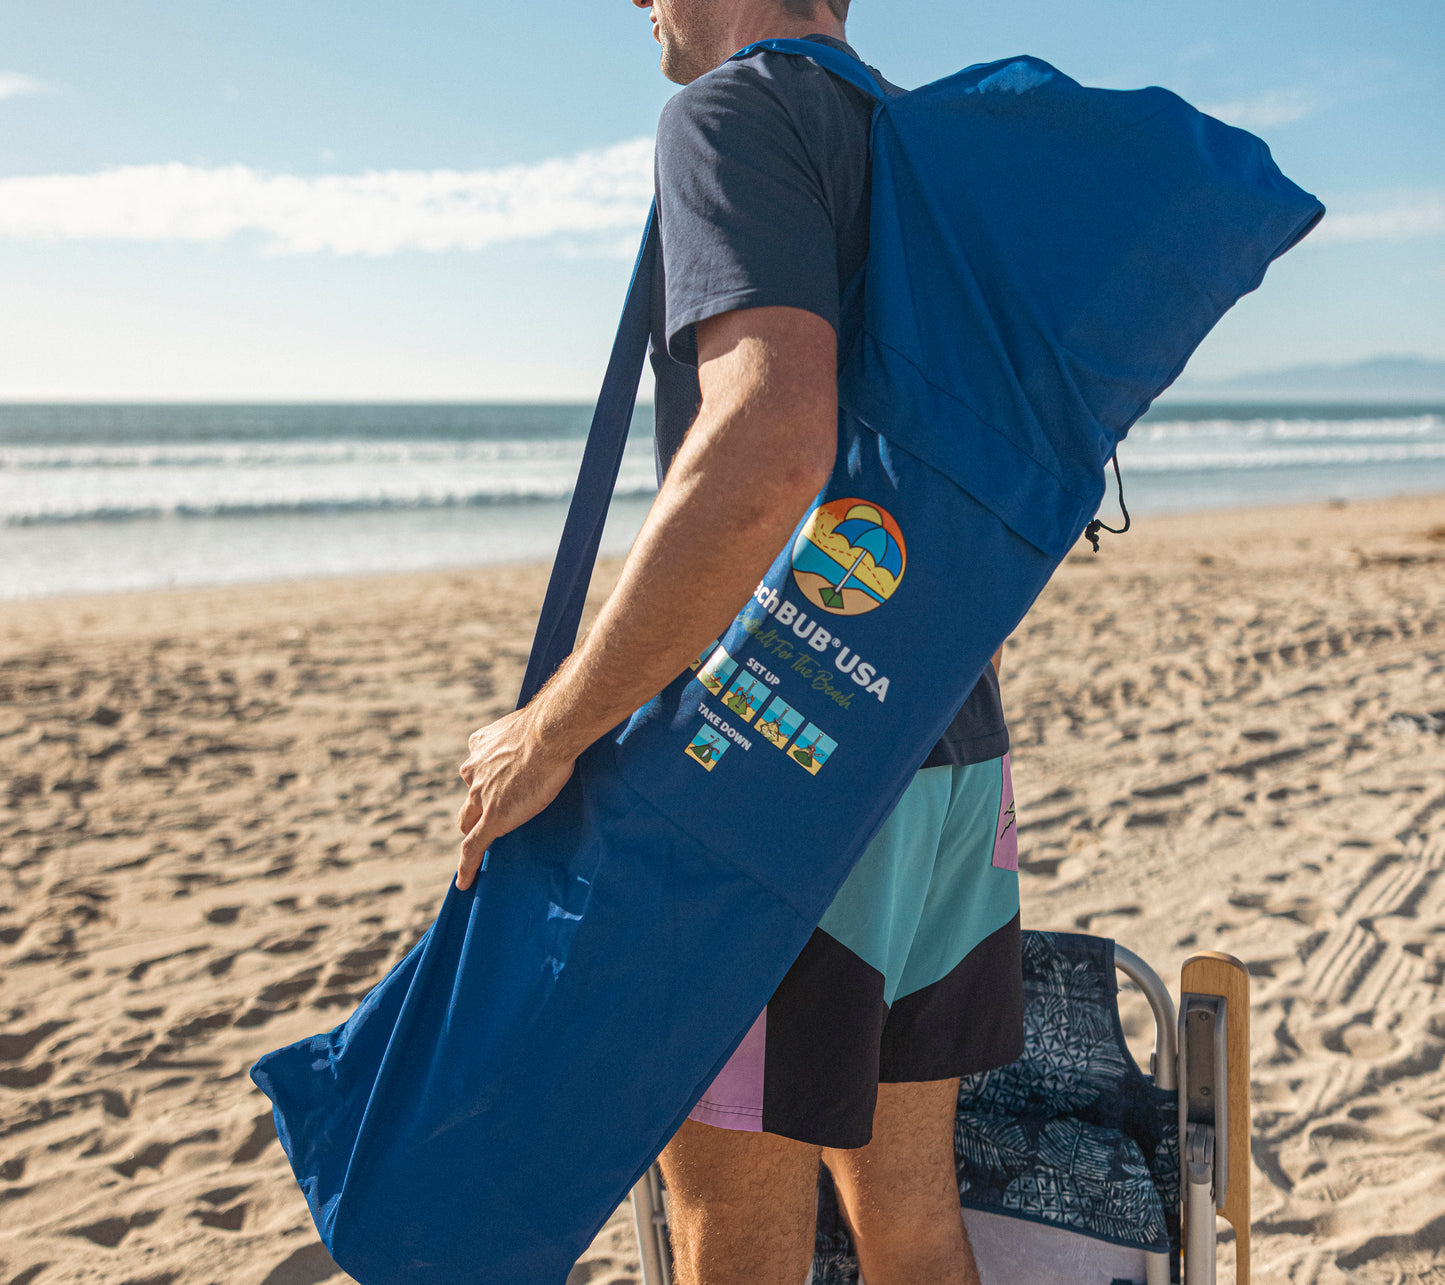 Accessories – Beach Umbrella Carry Bag